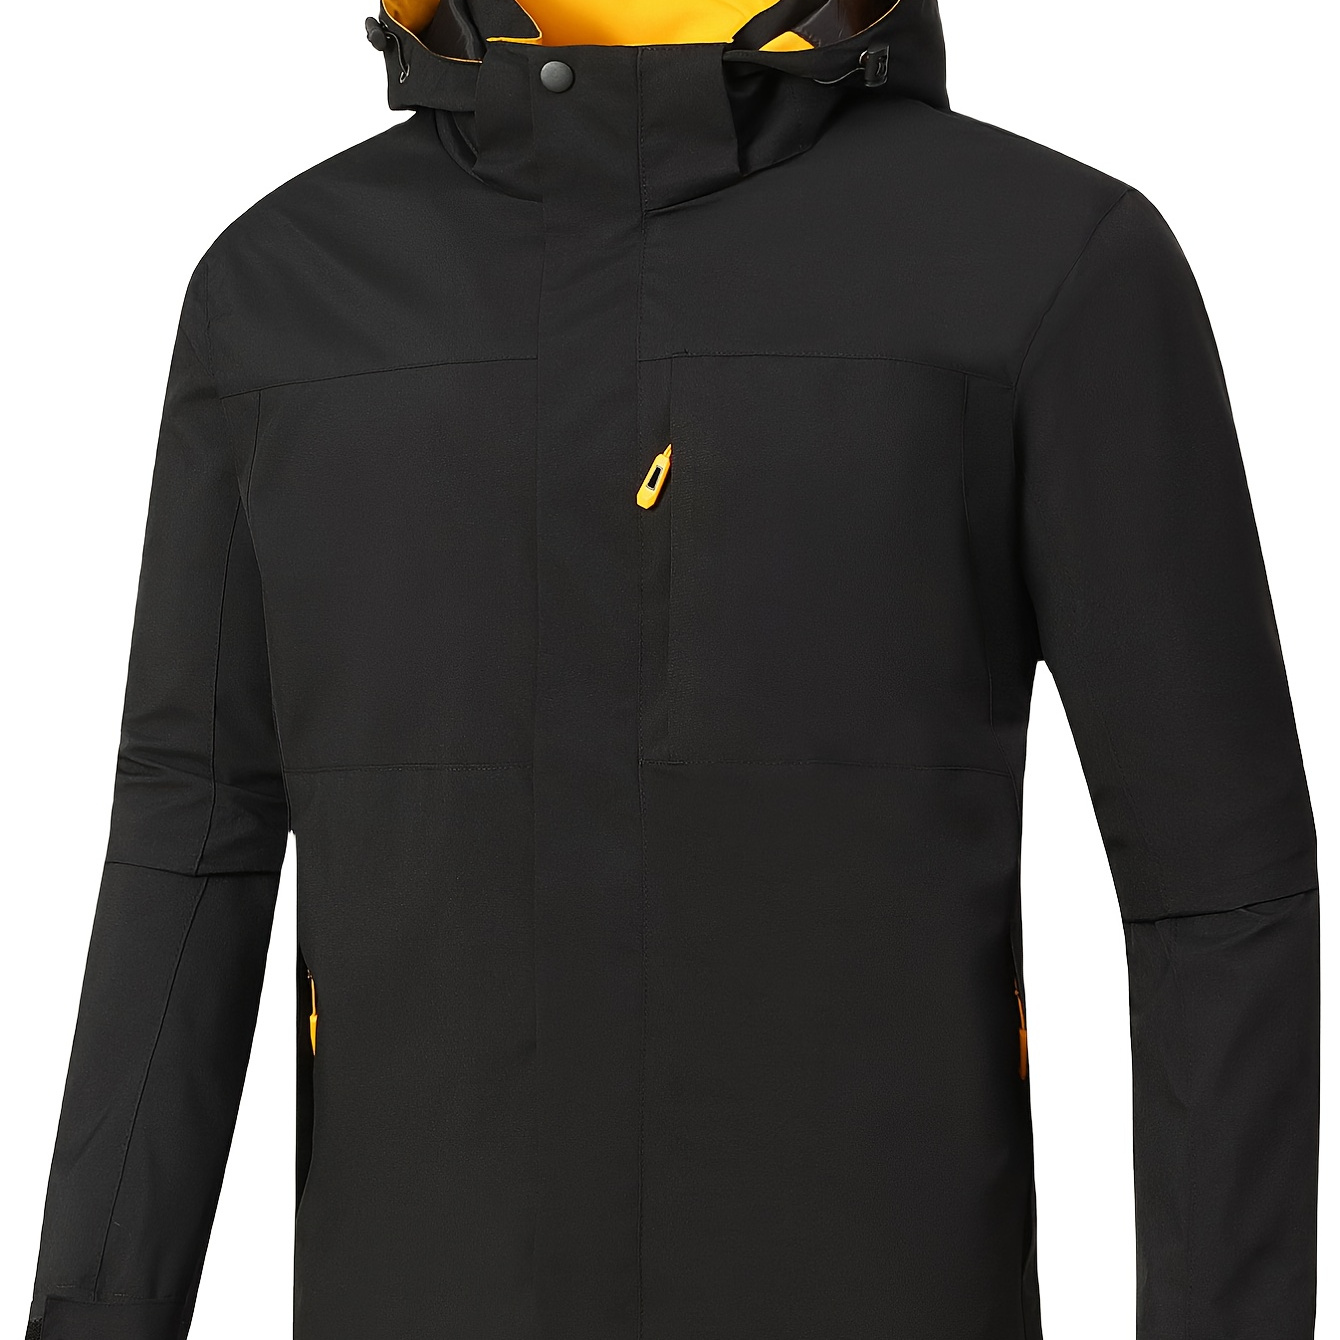 

Men's Lightweight Waterproof Rain Jacket, Hooded Shell Outdoor Raincoat Hiking Windbreaker Jacket Coat